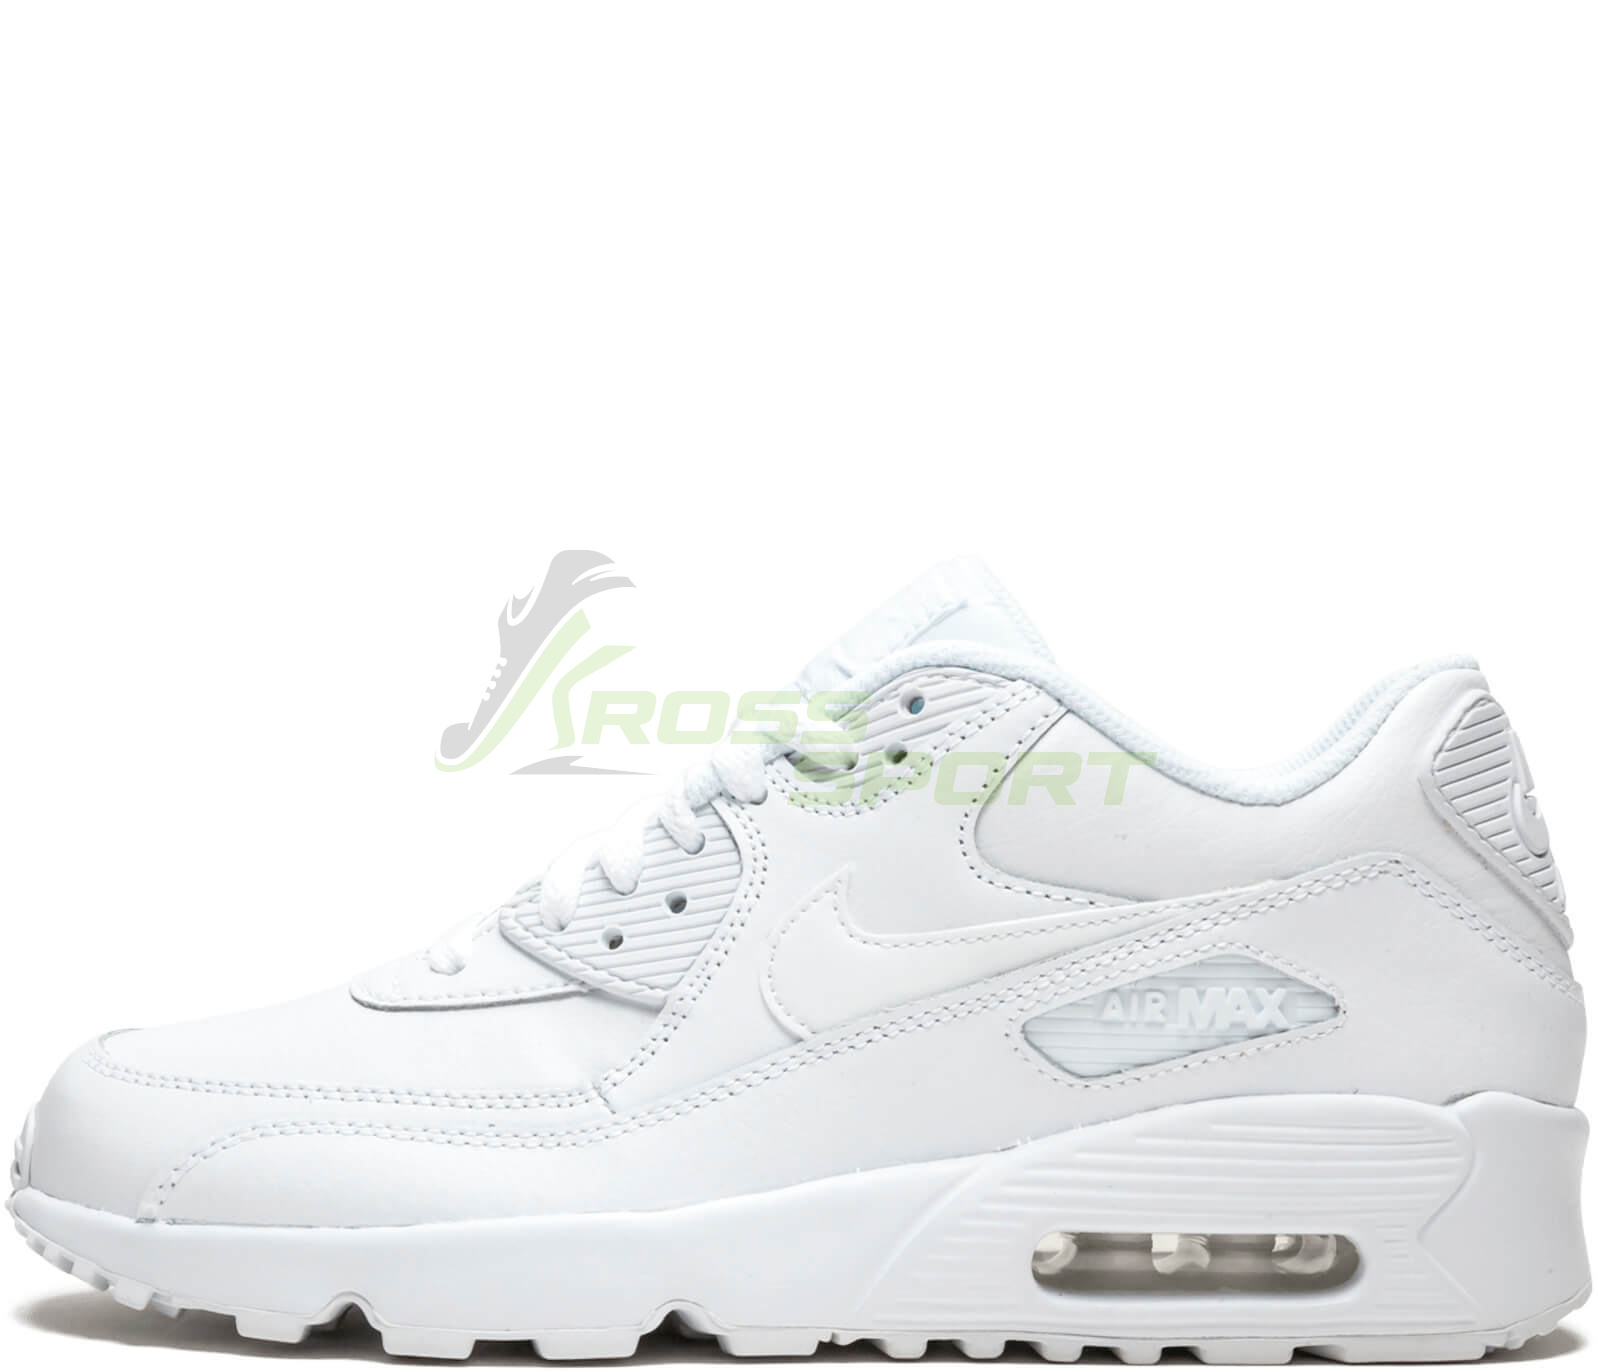  Nike Air Max 90 Leather White